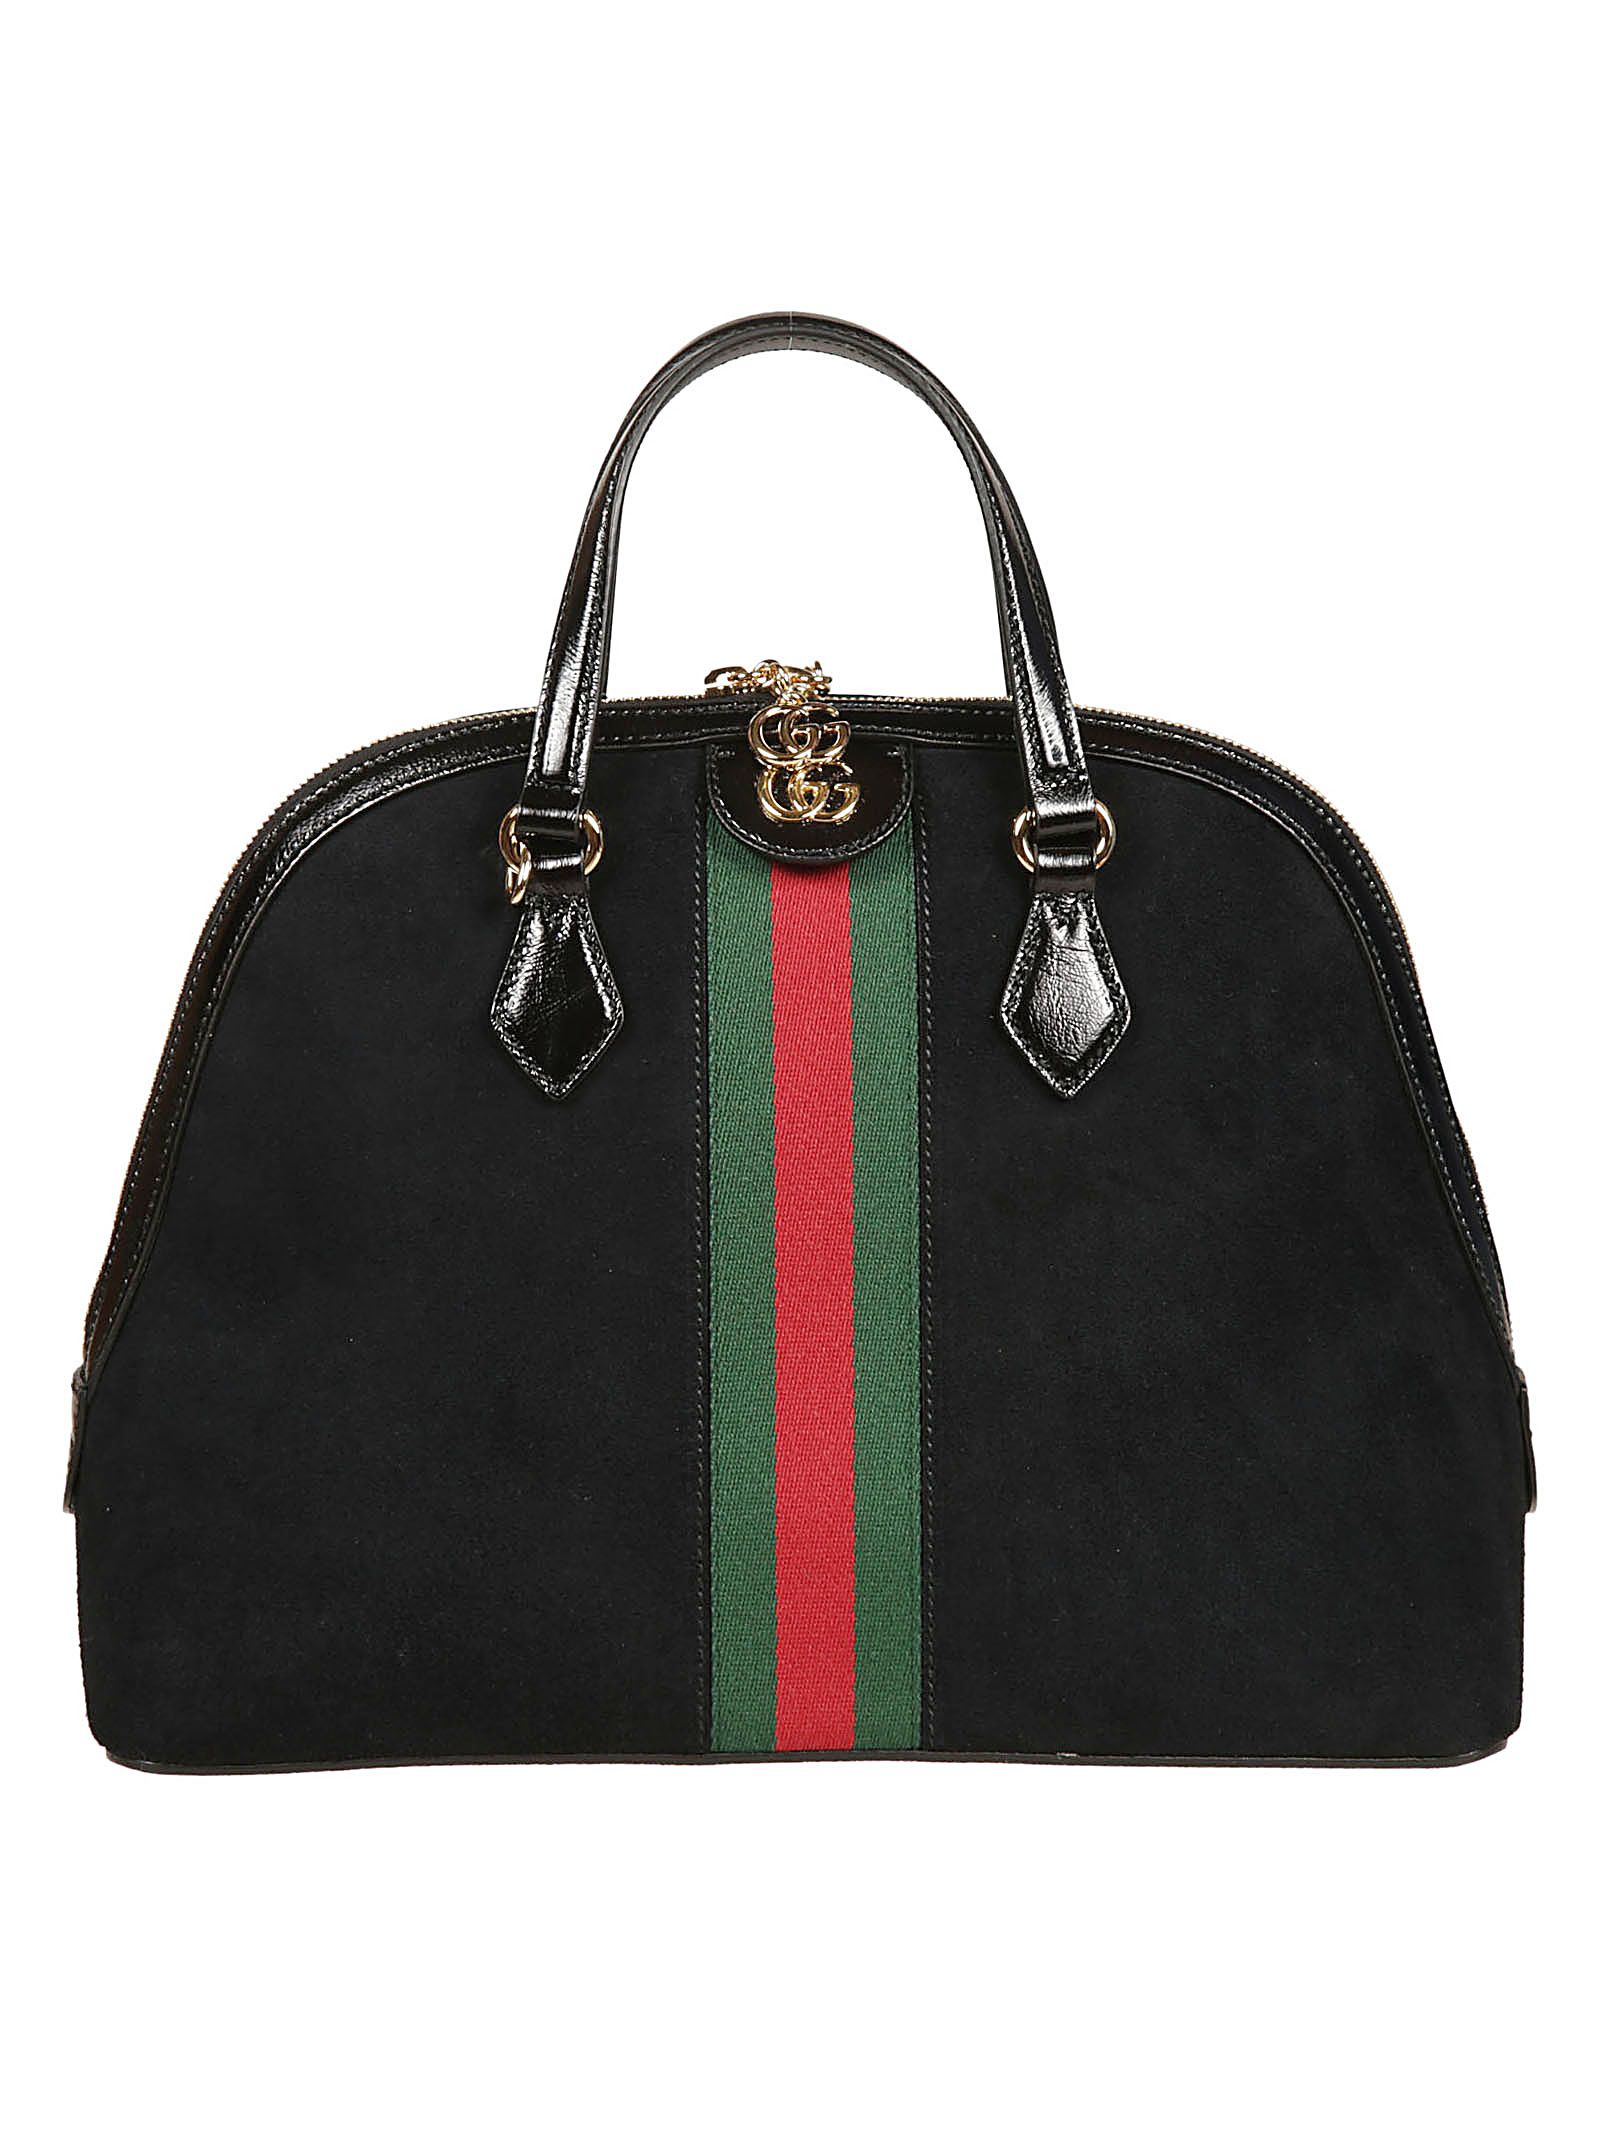 italist | Best price in the market for Gucci Gucci Medium Ophidia Tote - Nero - 10667377 | italist